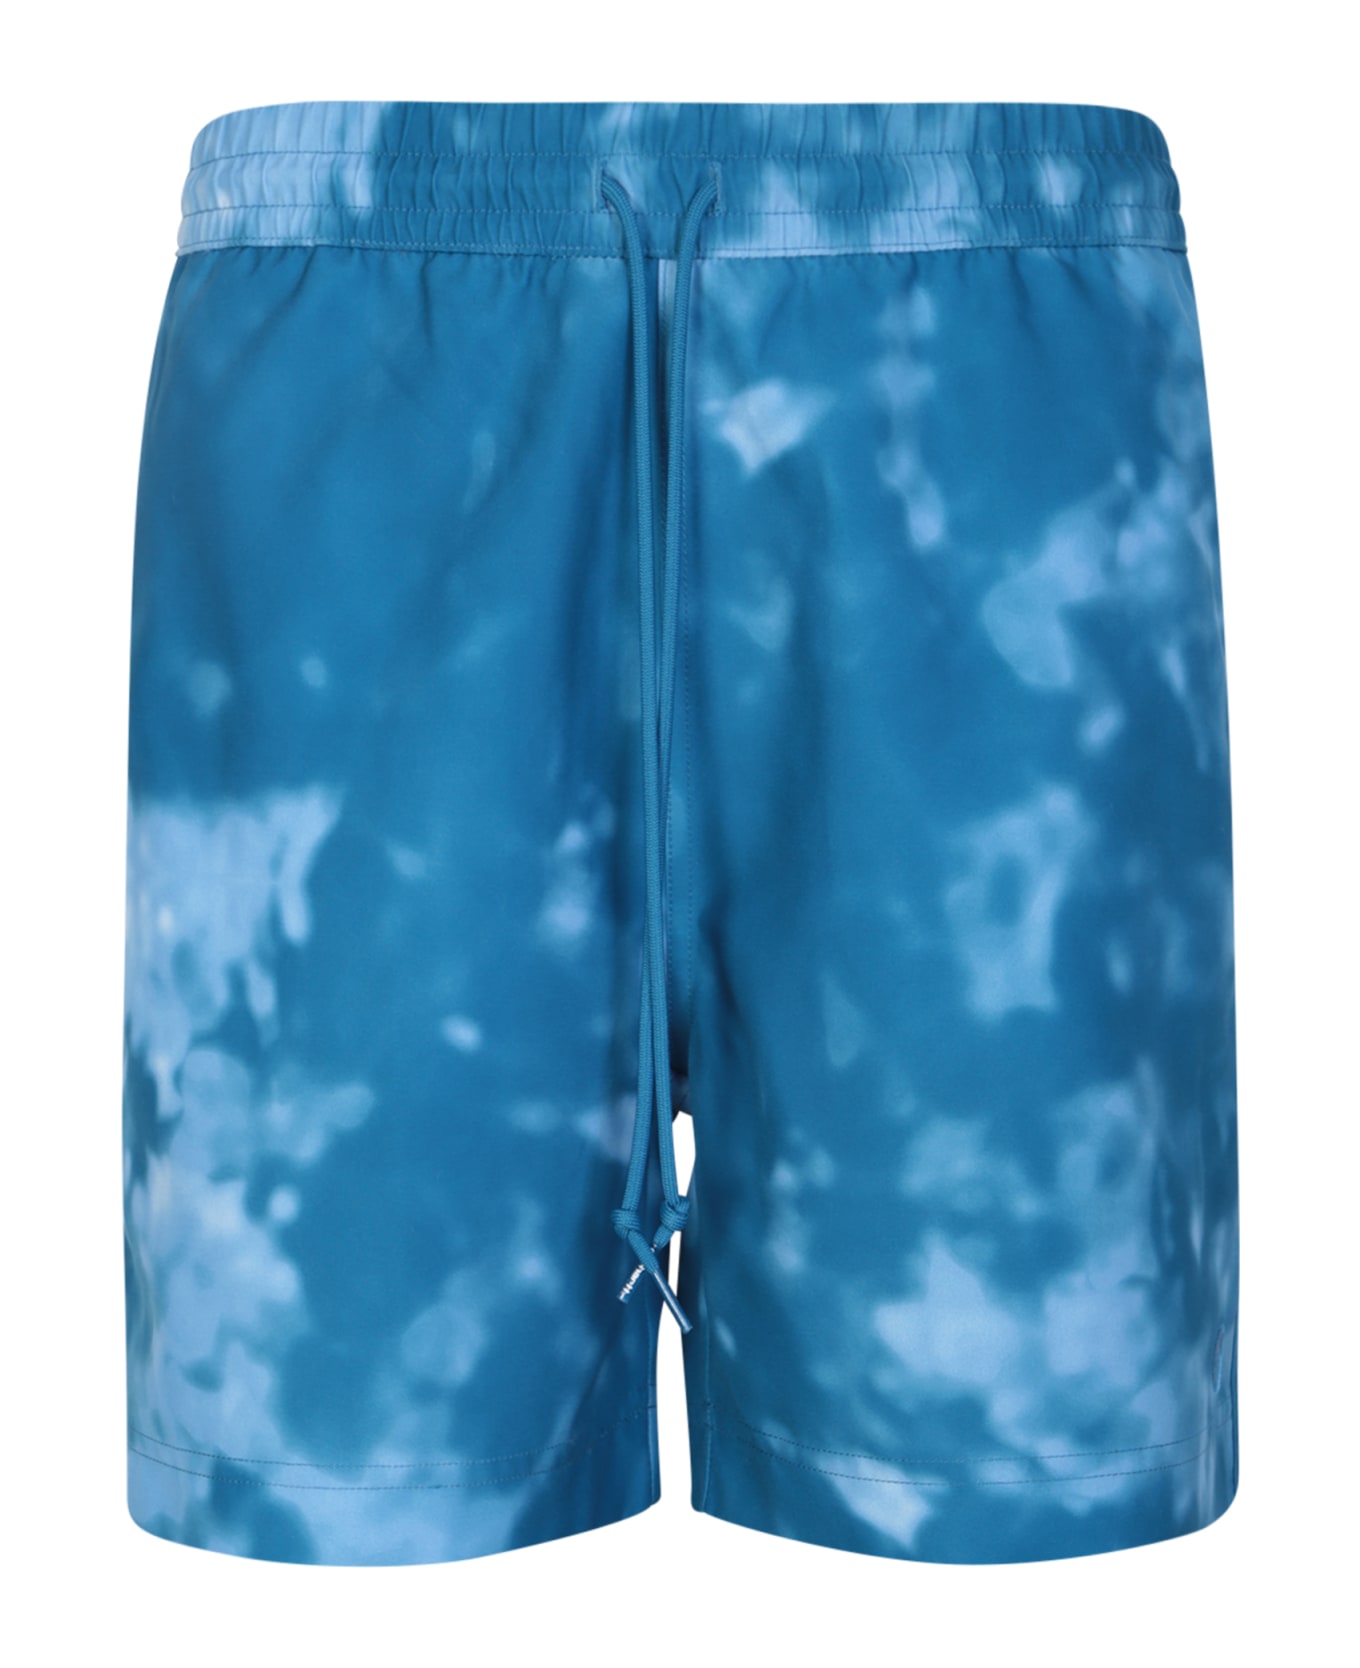 Carhartt Blue Slater Amalfi Swimming Shorts - Blue